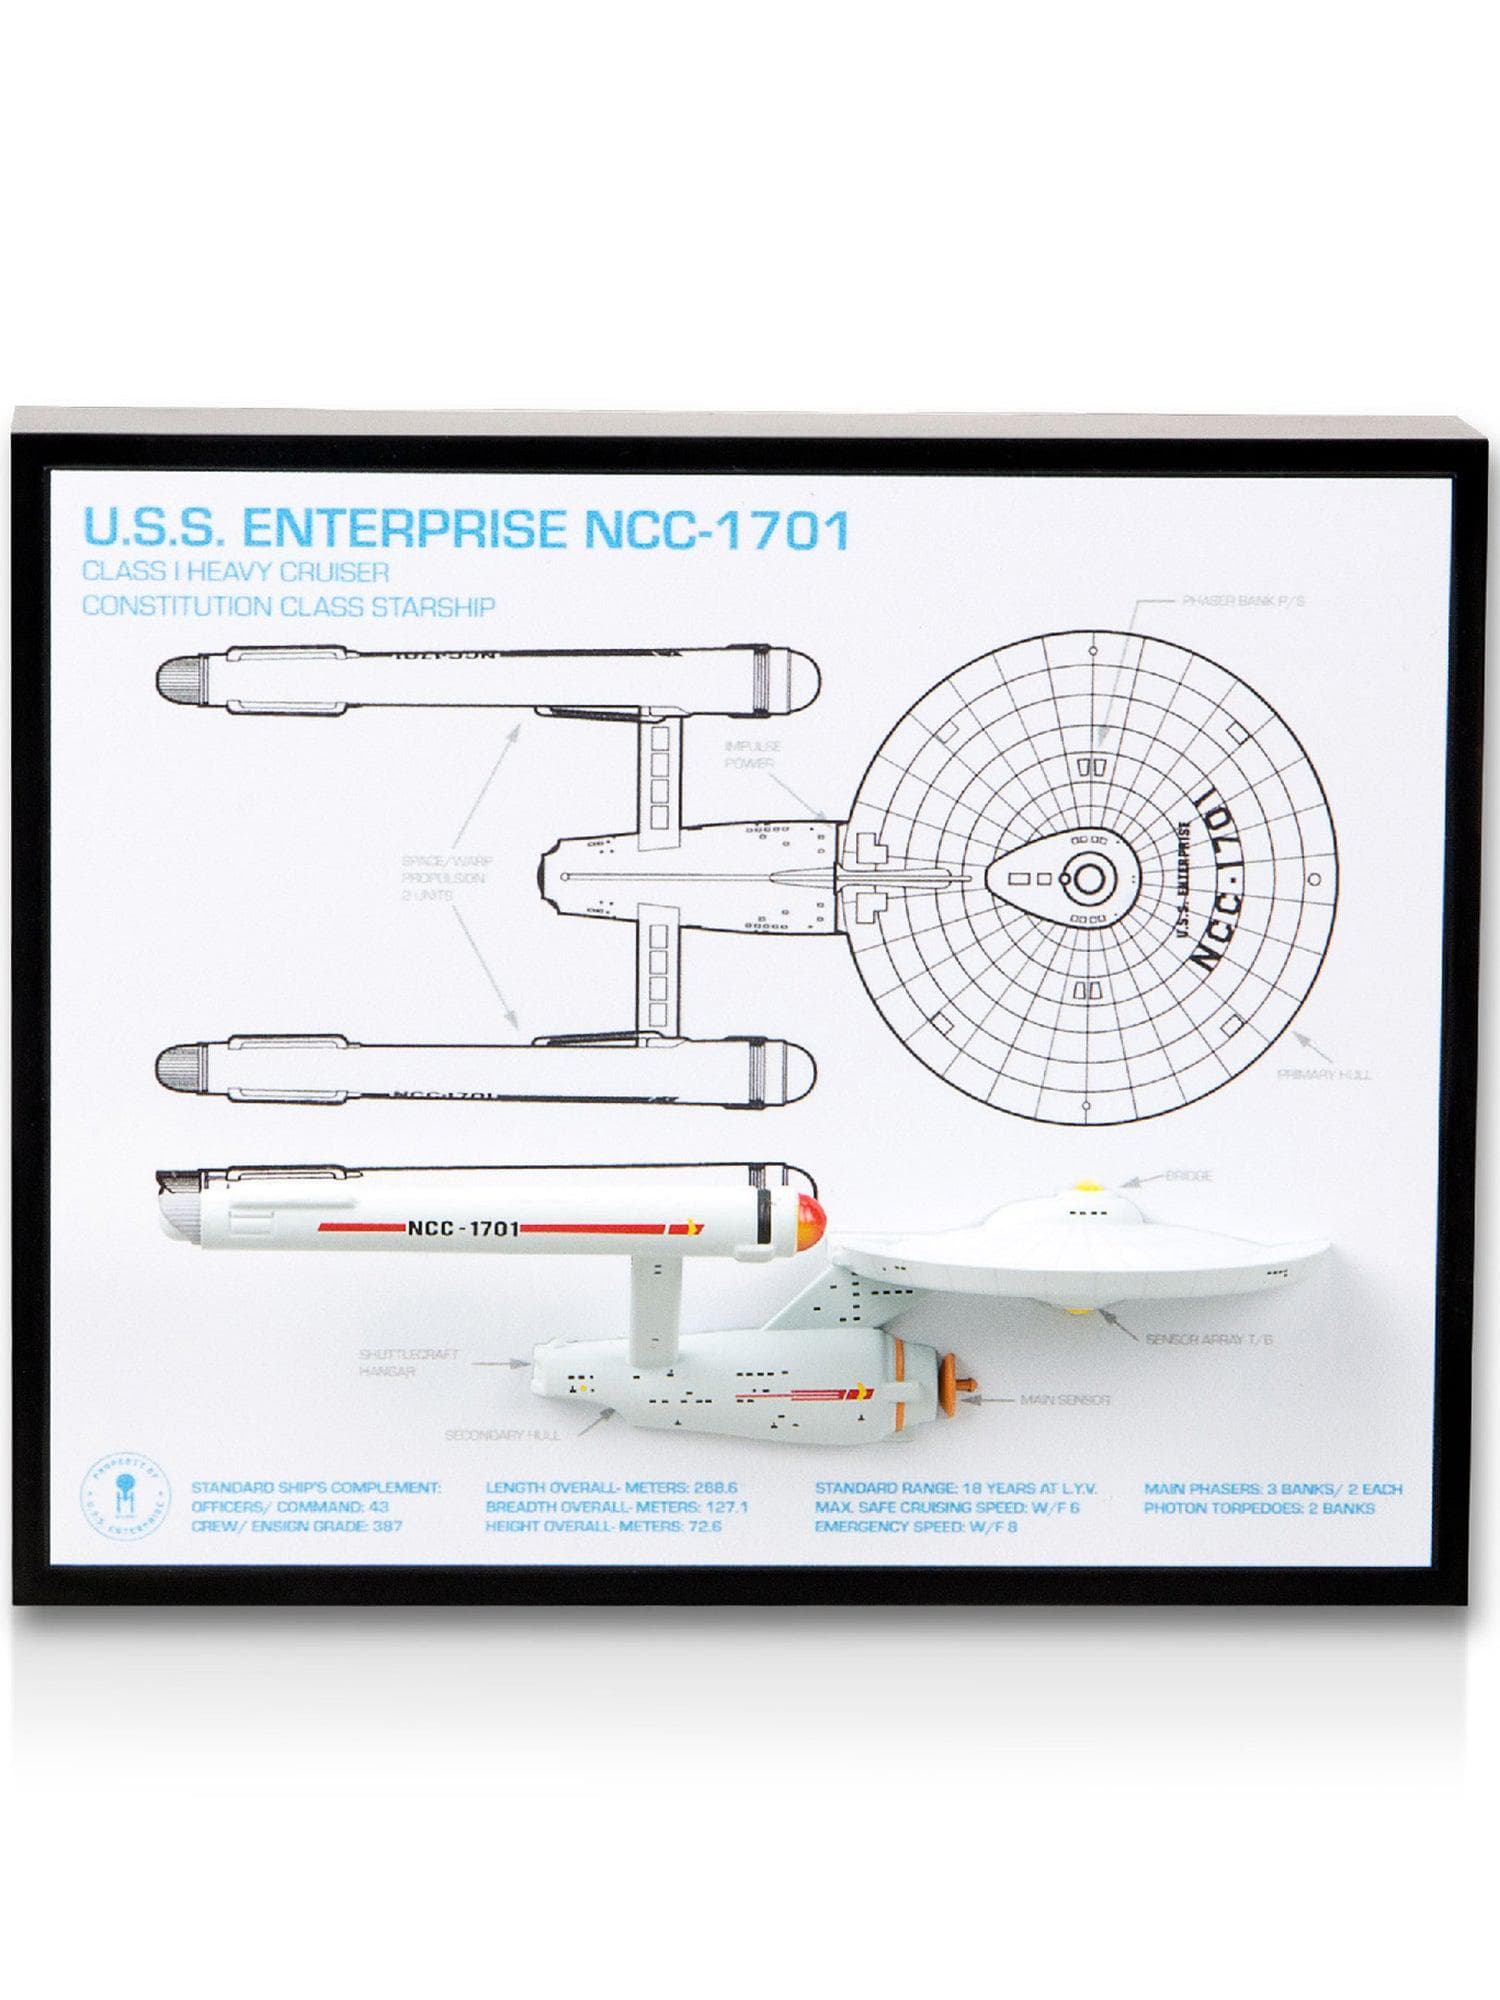 Star Trek - The Enterprise 3D Blueprint - costumes.com